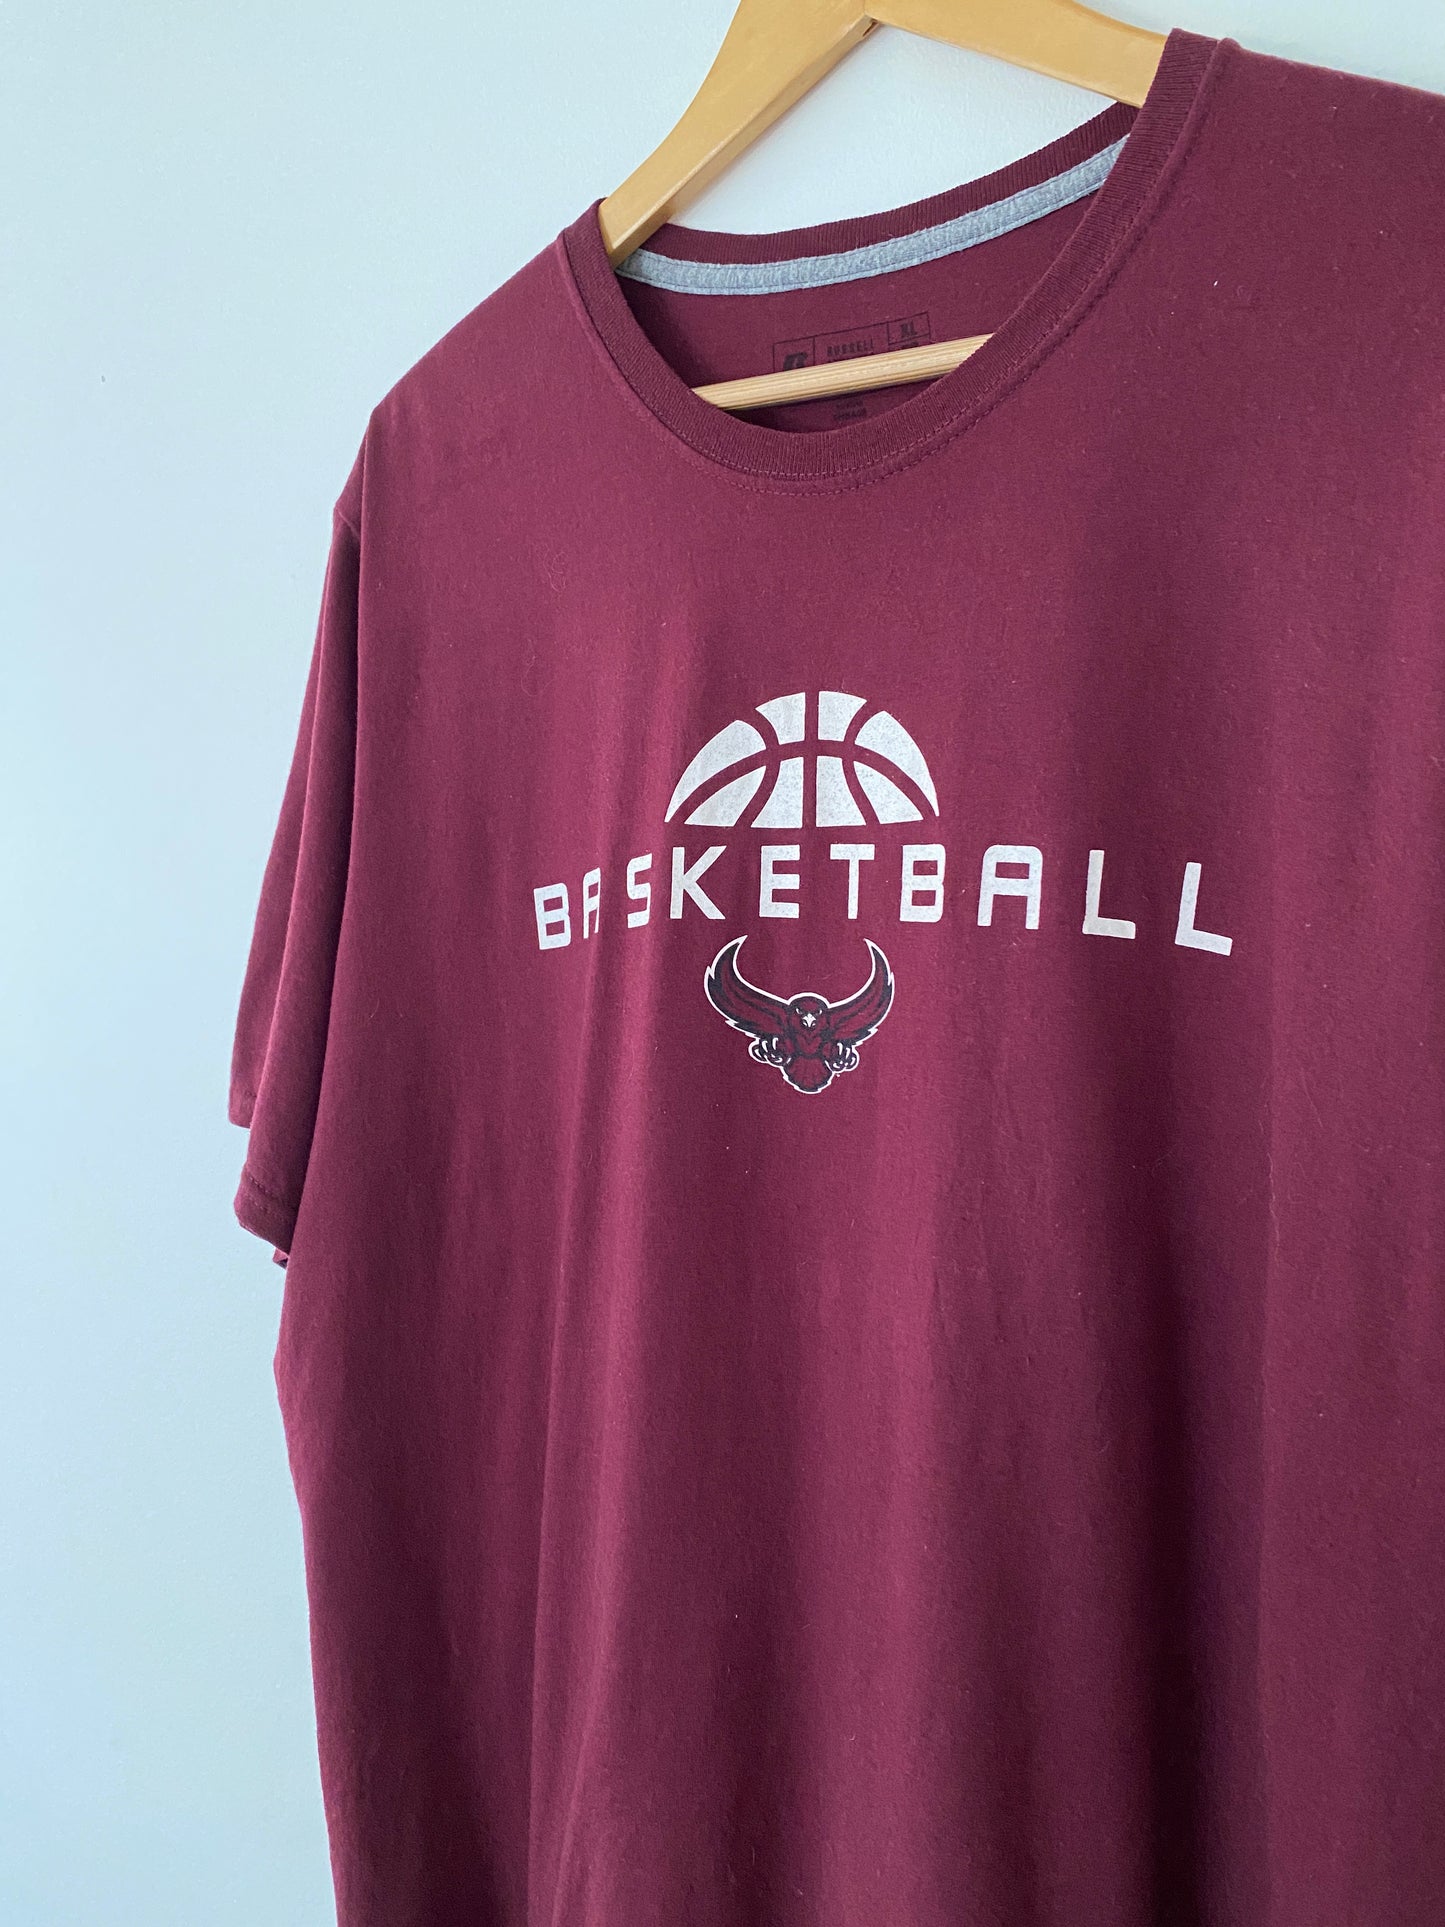 Atlanta Hawks Basketball T-Shirt - XL